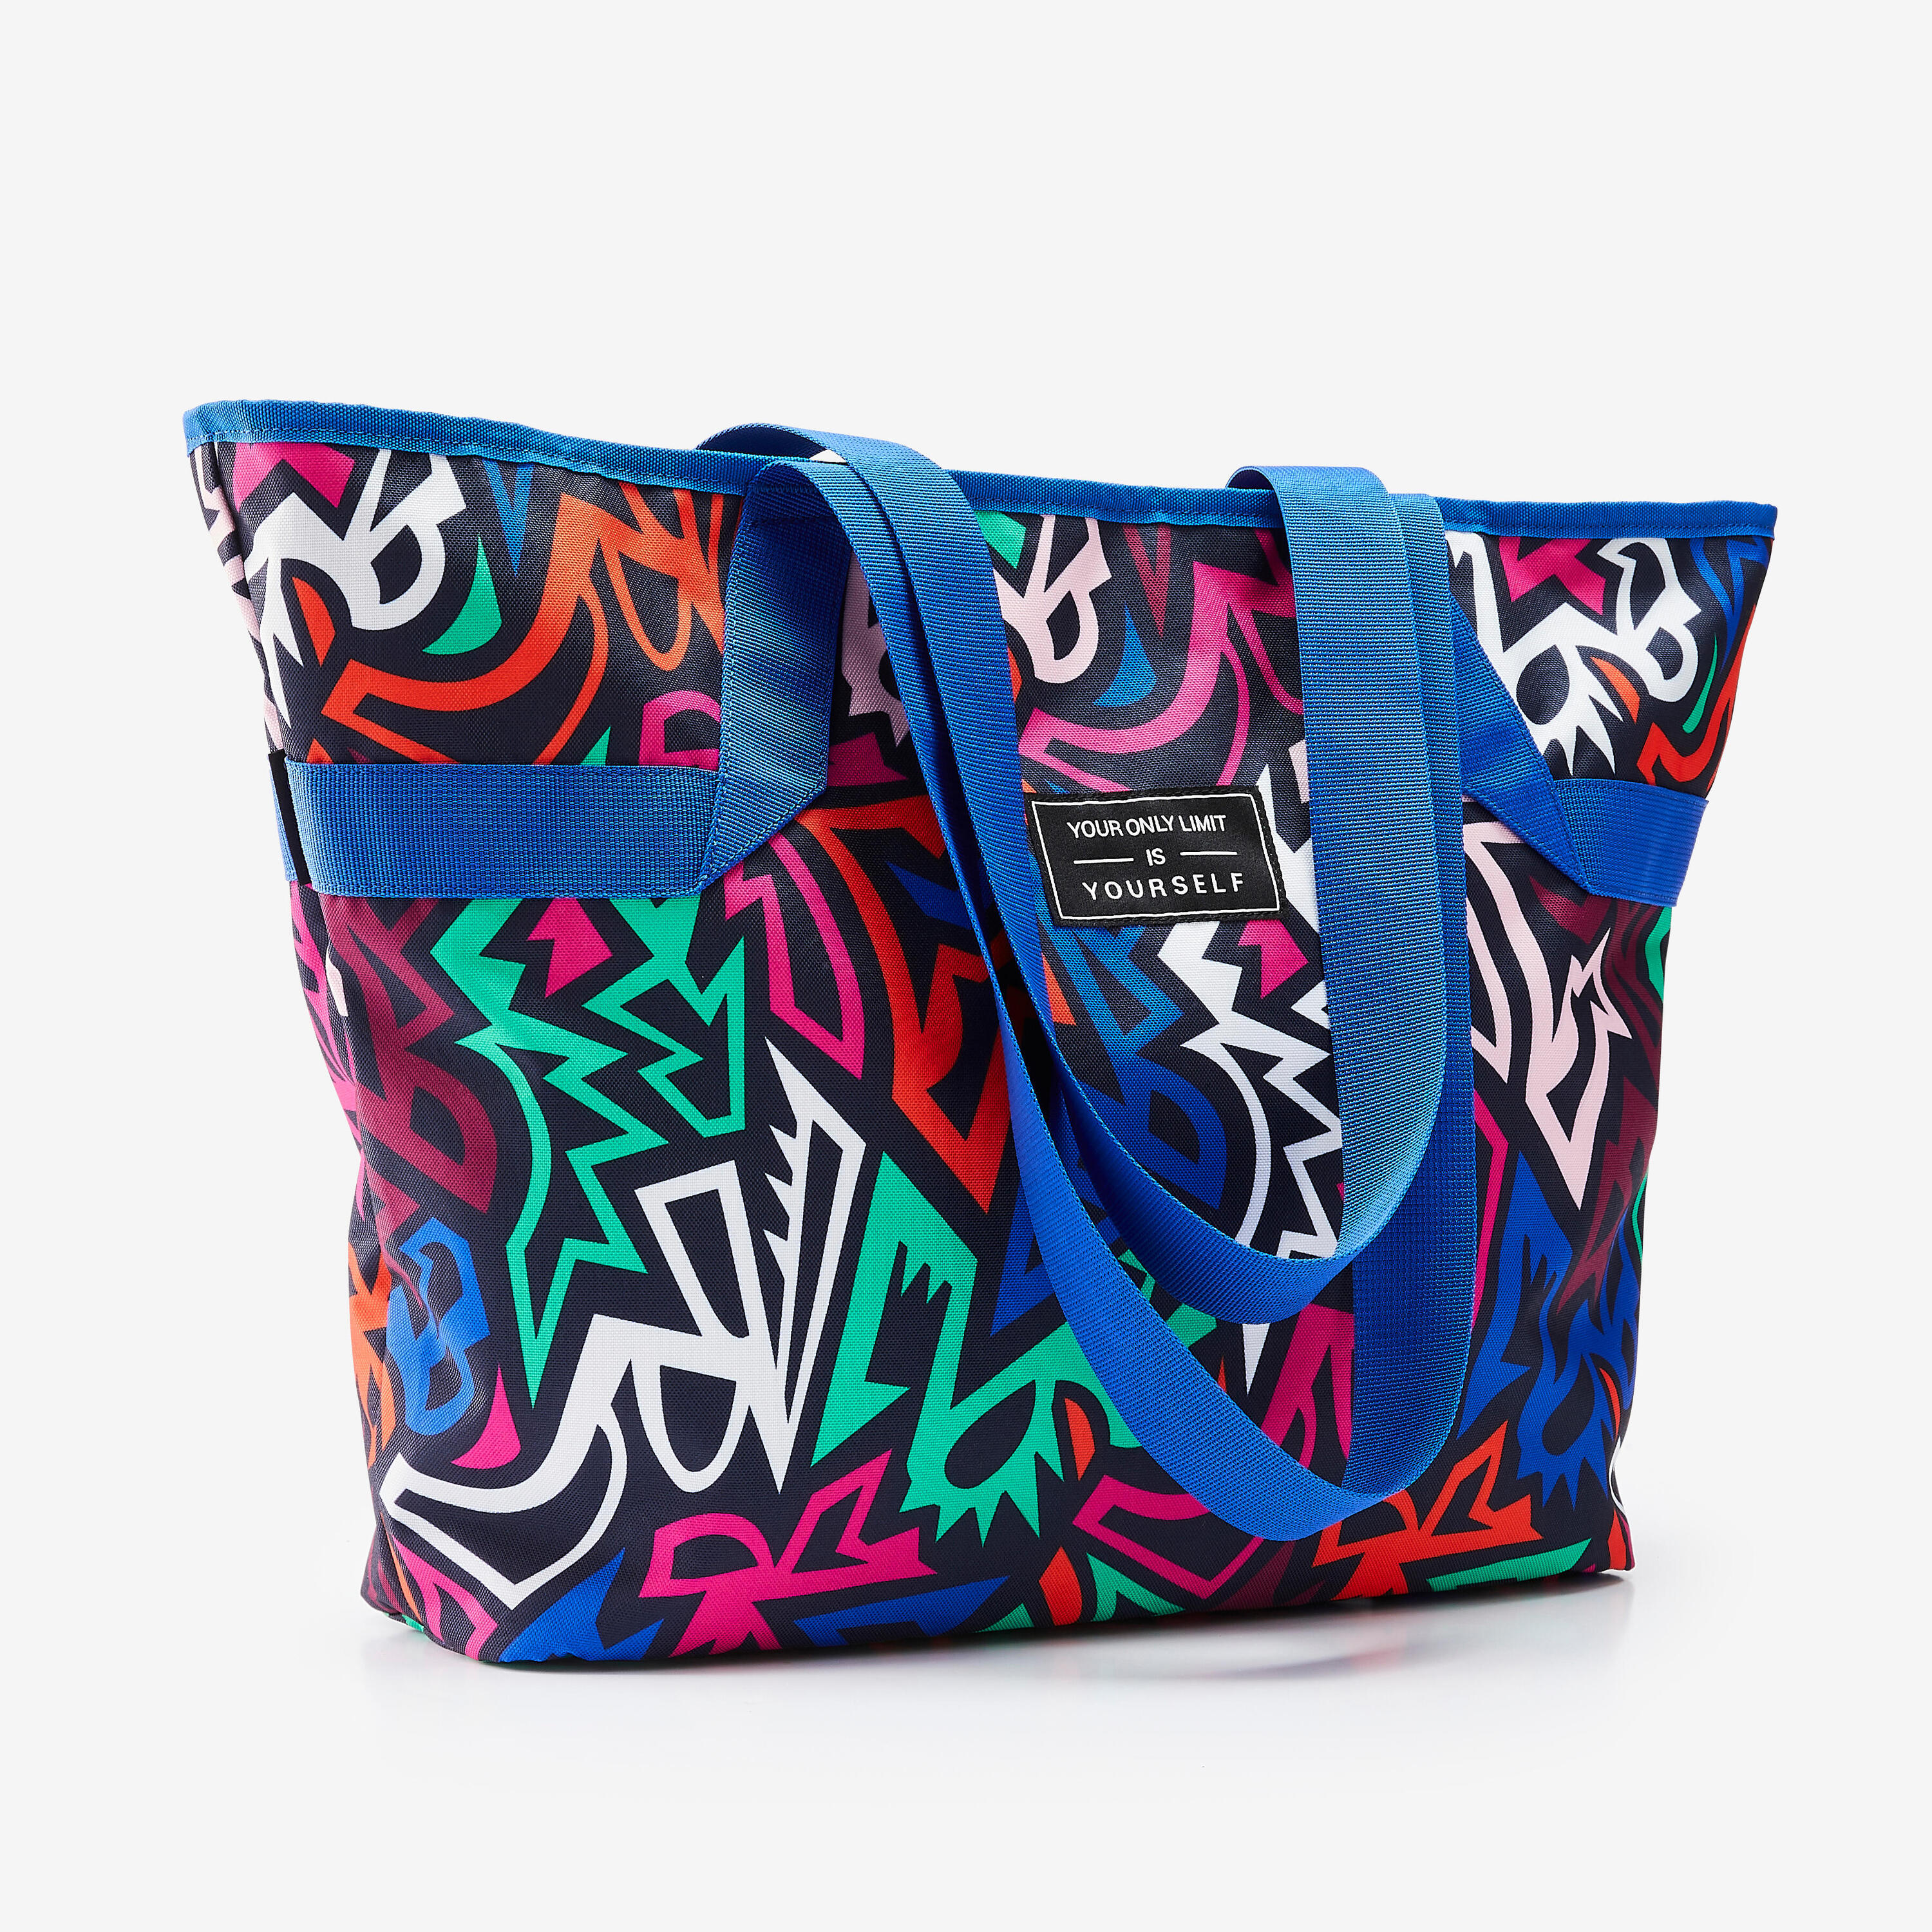 DOMYOS 25 L Fitness Tote Bag - Multicoloured Print